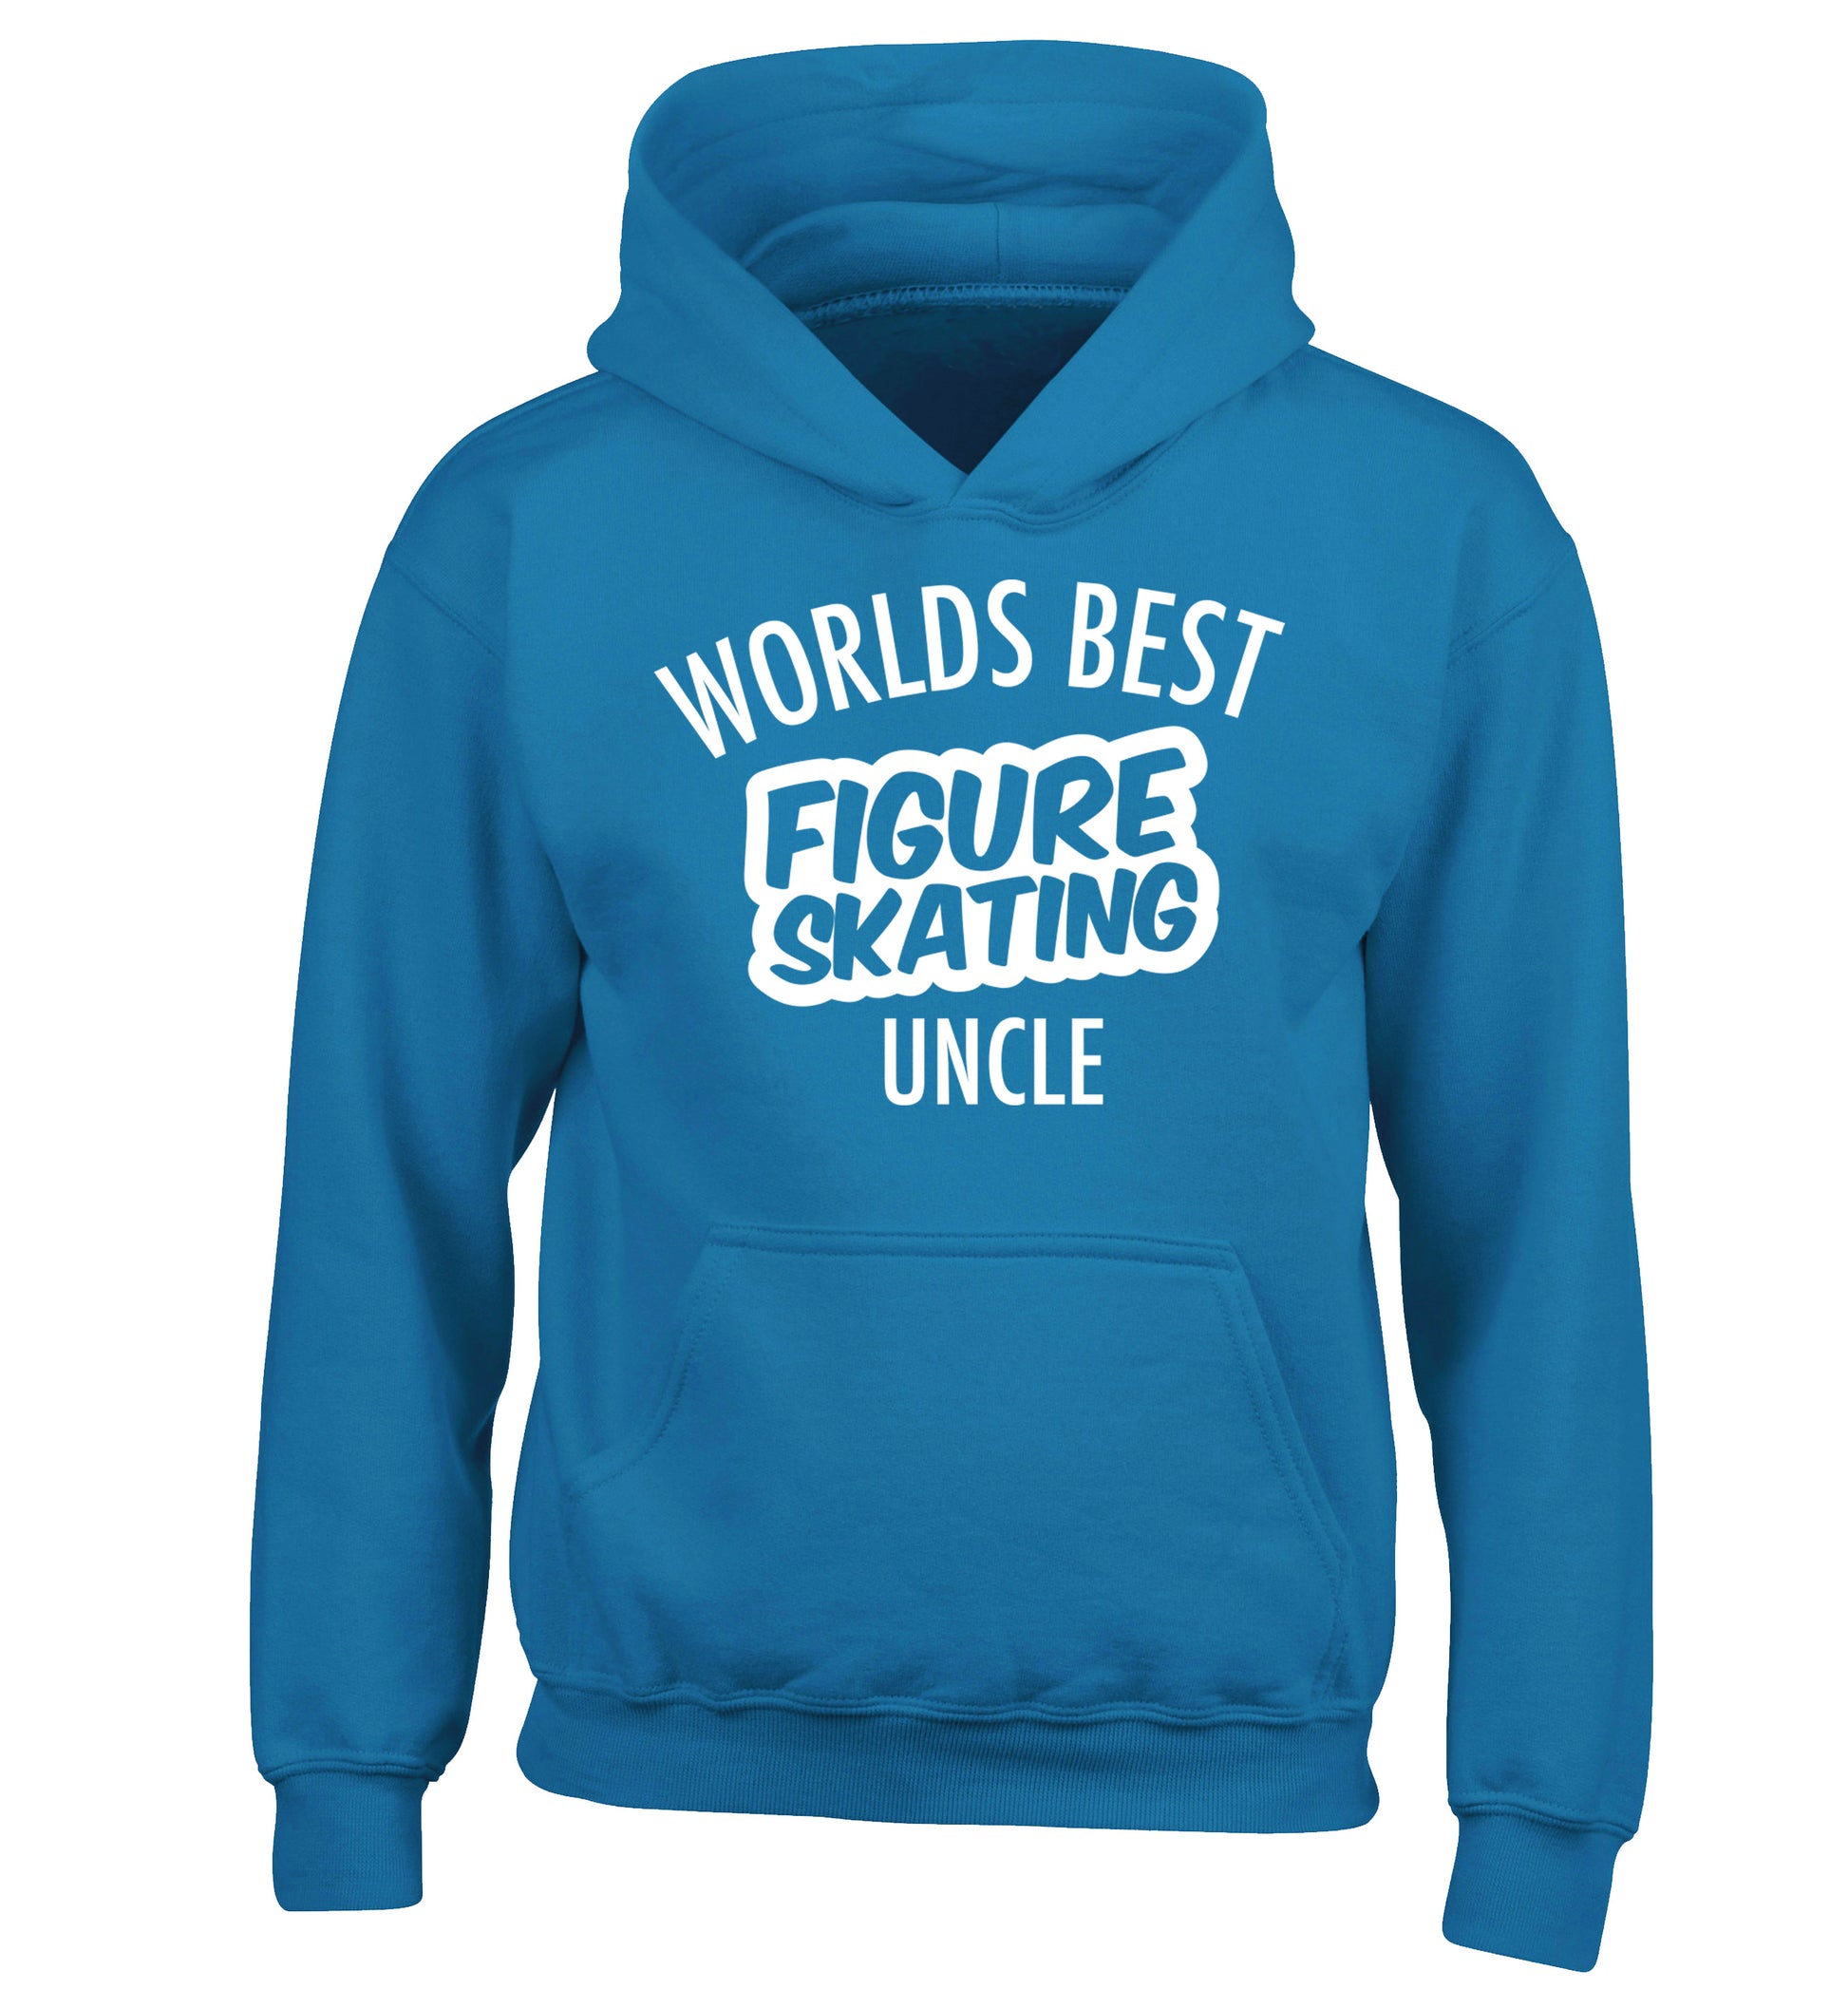 Worlds best figure skating uncle children's blue hoodie 12-14 Years